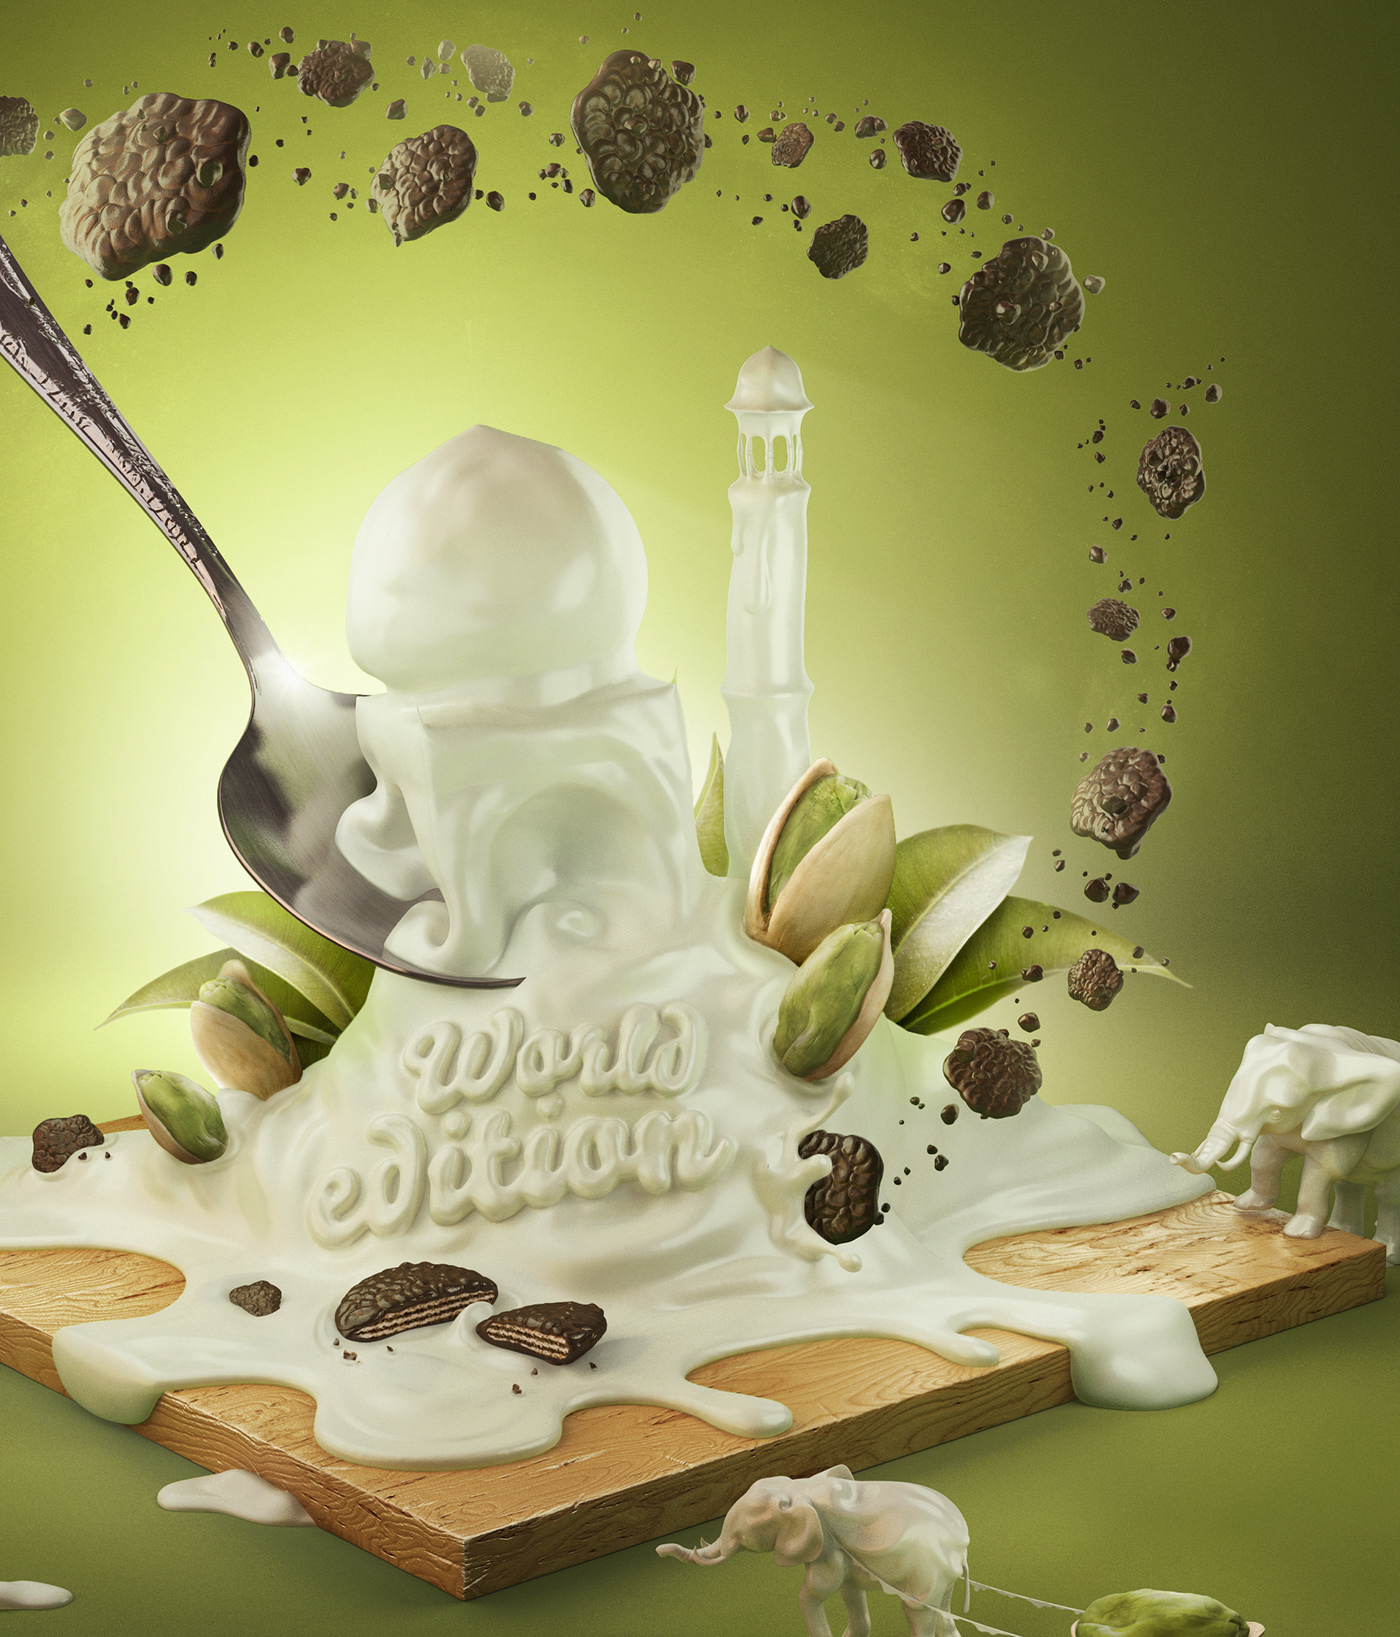 yoghurt pistachio chocolate elephant biscuit Taj Mahal 3D CGI stylized muller